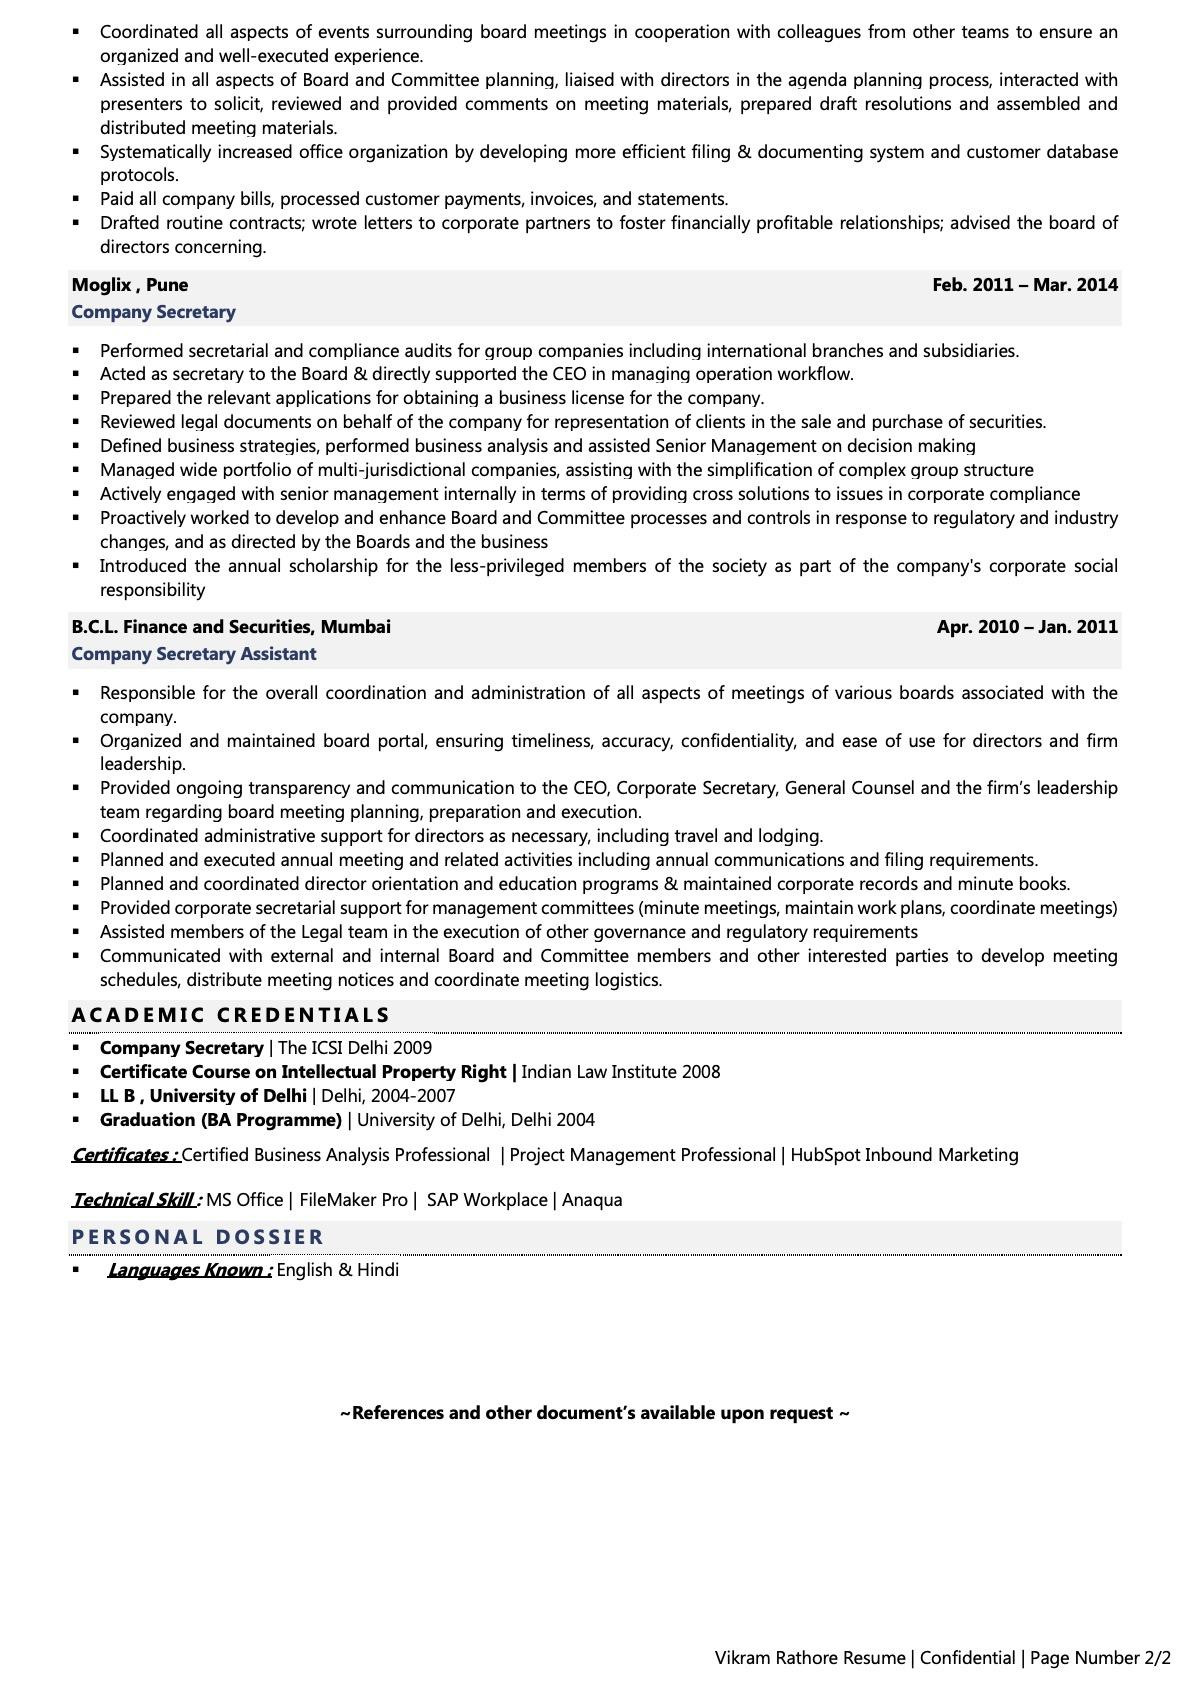 Resume Sample for Company Secretary Executive Company Secretary Resume Examples & Template (with Job Winning Tips)